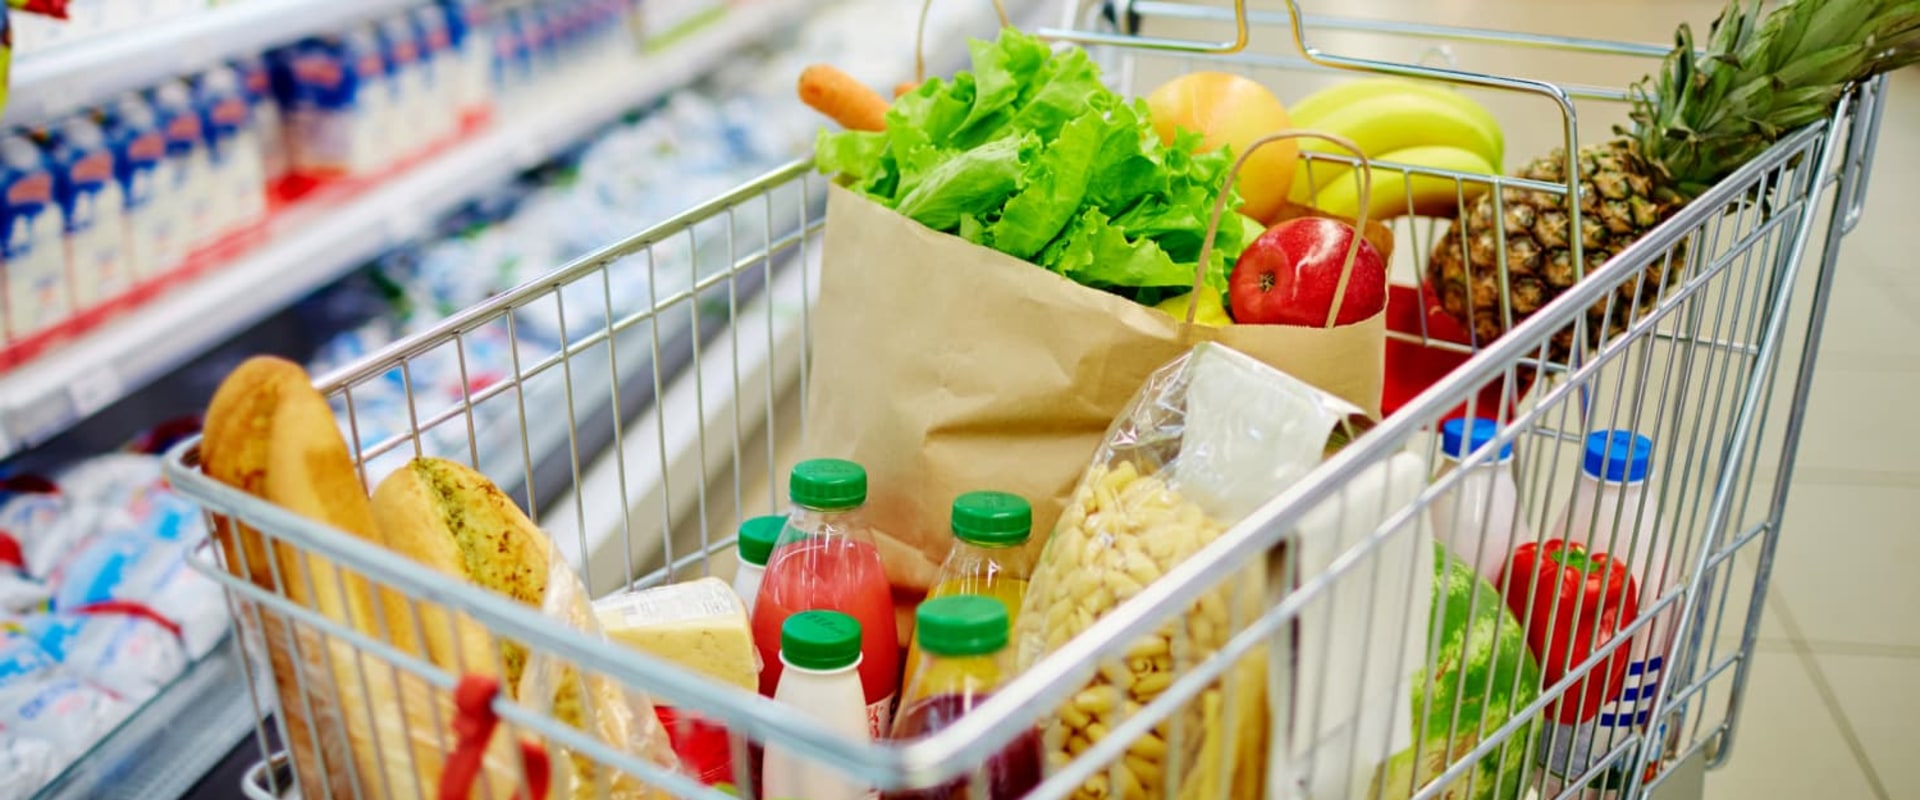 How do i prepare for grocery shopping?